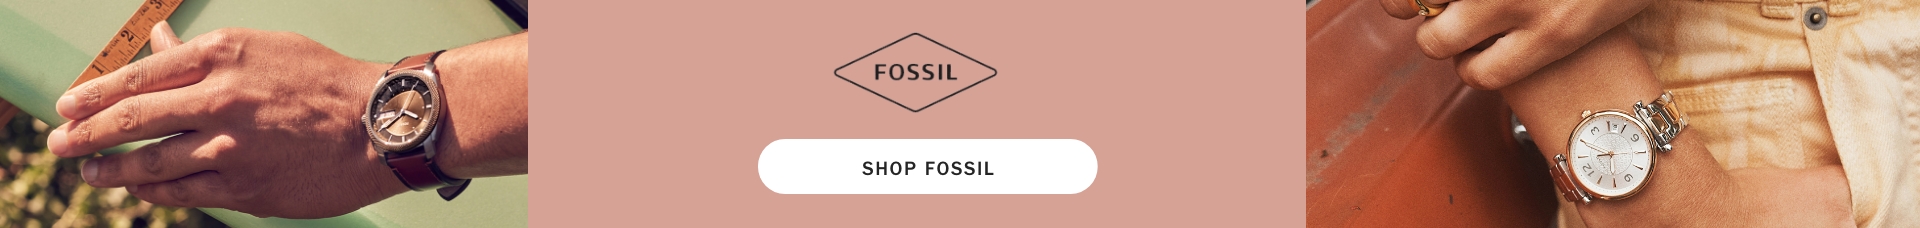 Fossil Brand Banner